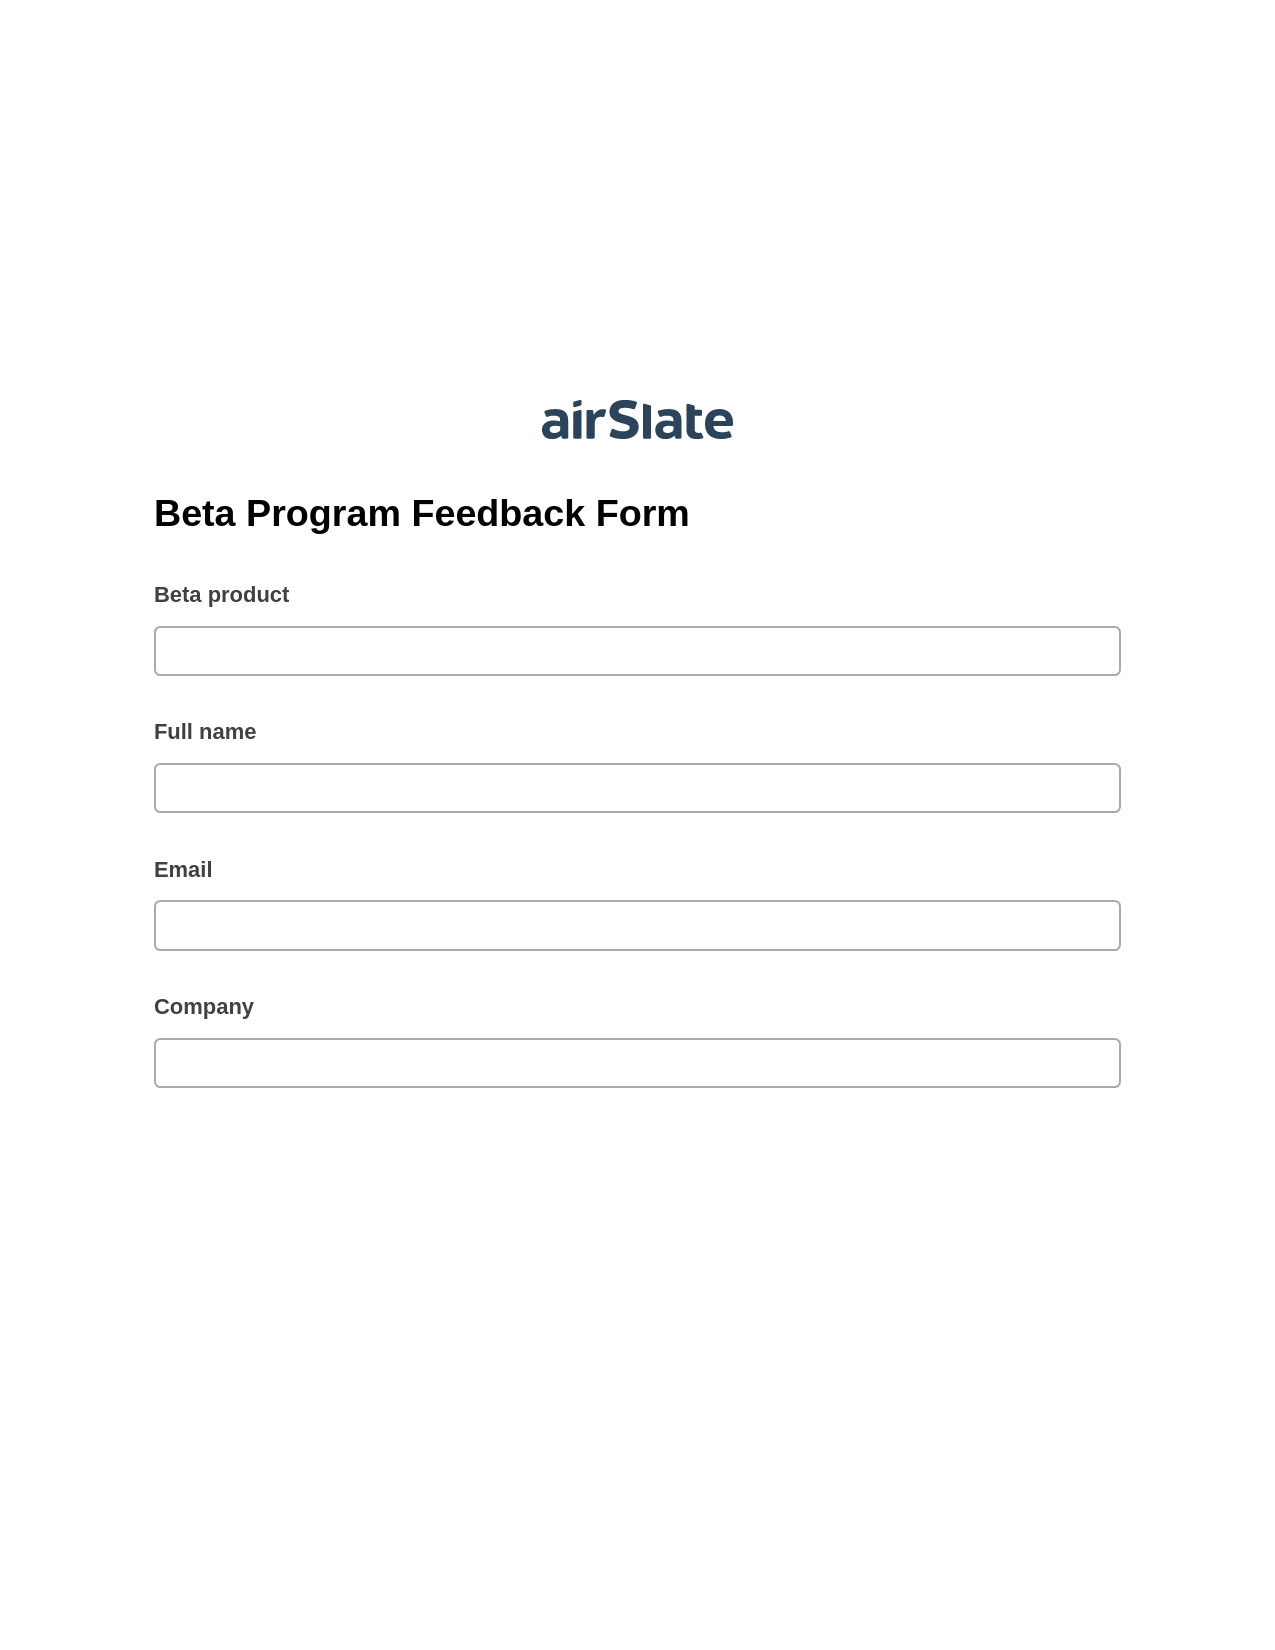 Beta Program Feedback Form Pre-fill Document Bot, Pre-fill with Custom Data Bot, Archive to SharePoint Folder Bot